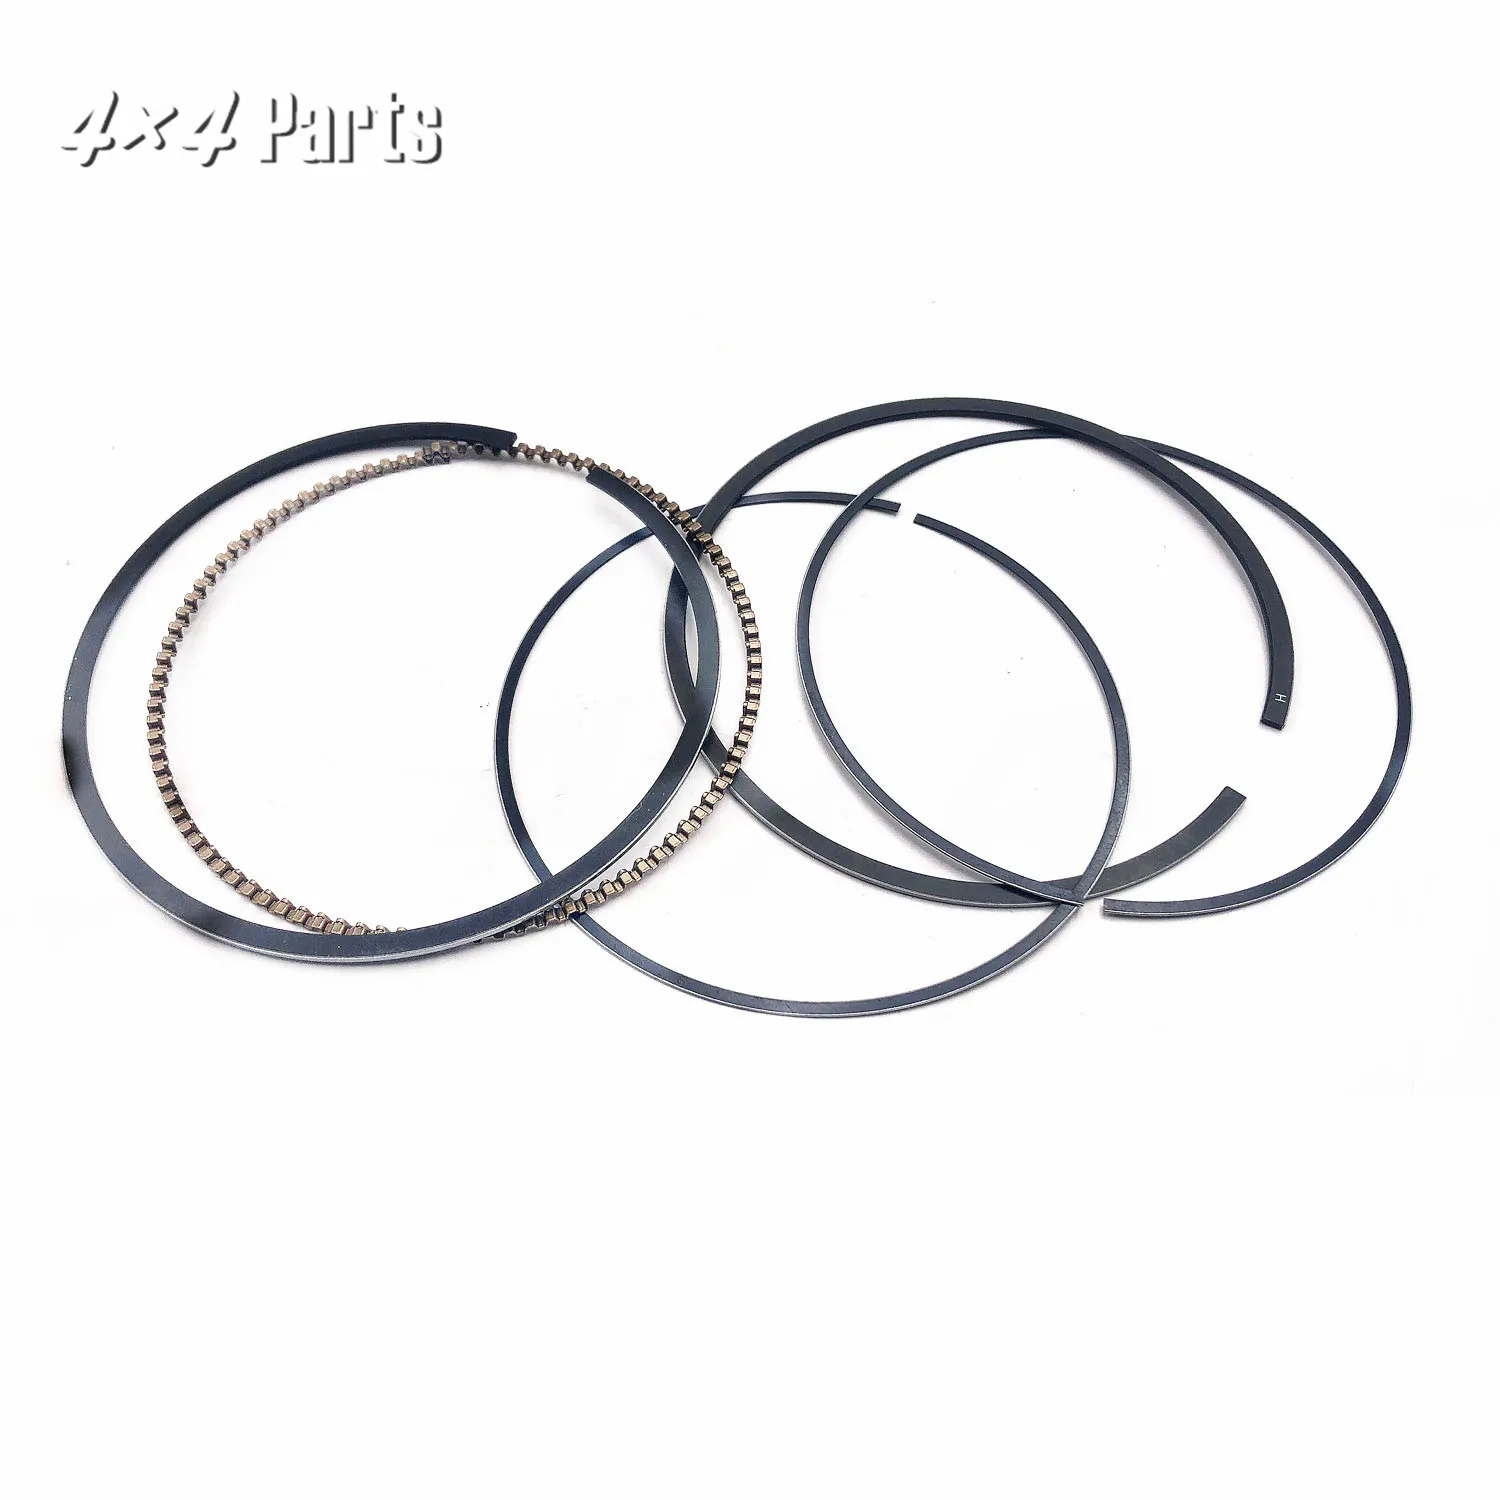 Piston Ring Set Assy for HISUN 700 ATV UTV HS CODE 1311A-007000-0000 ERP CODE P0070001311A0000